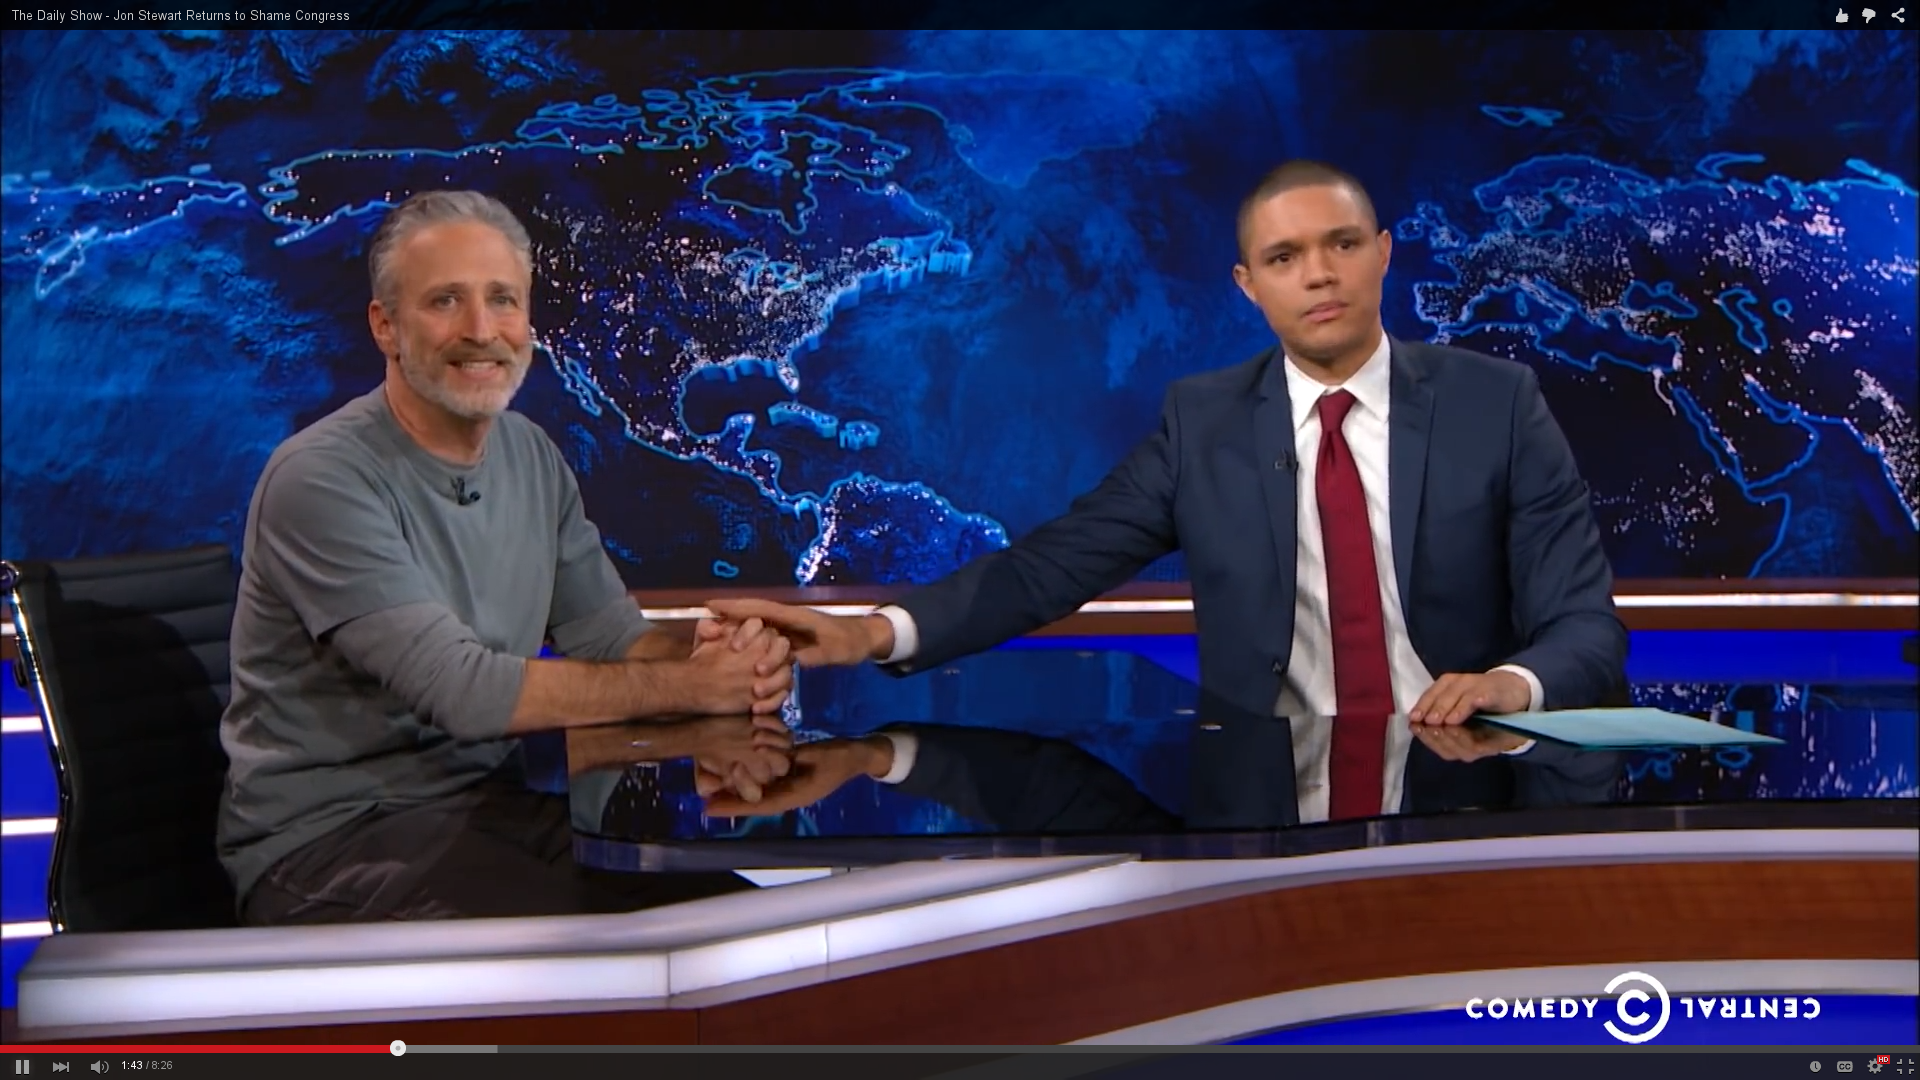 Jon Stewart returns to The Daily Show